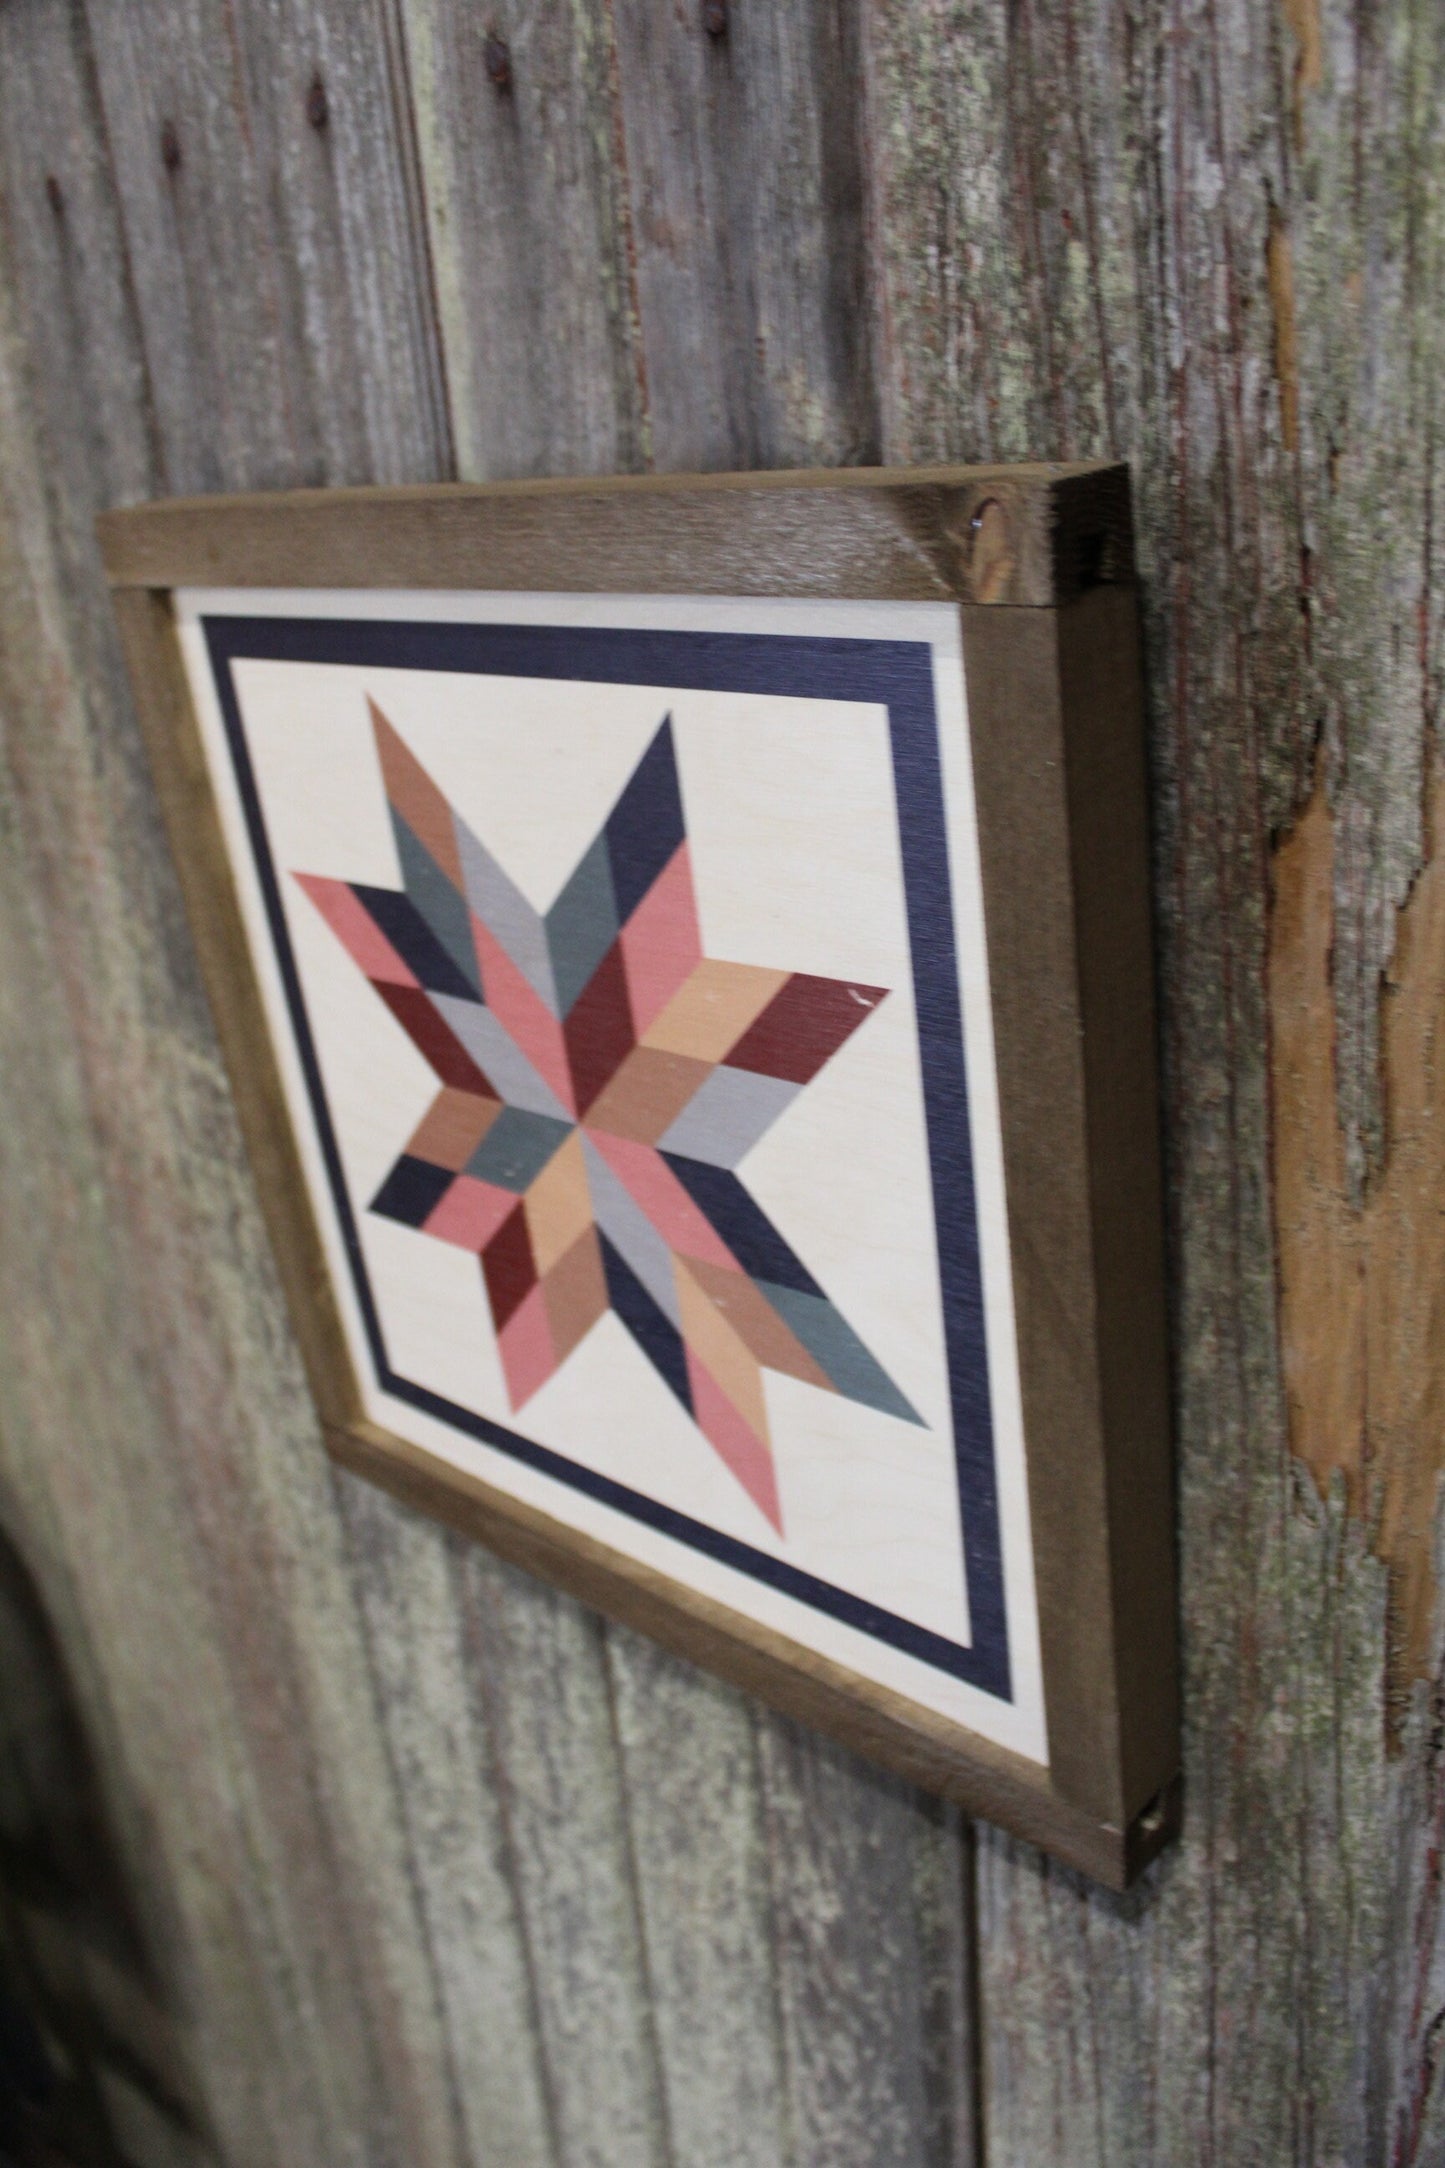 Star Triangle Barn Quilt Wood Sign Stylized Geometric Origami Pastel Square Pattern Block Wall Art Farmhouse Primitive Rustic